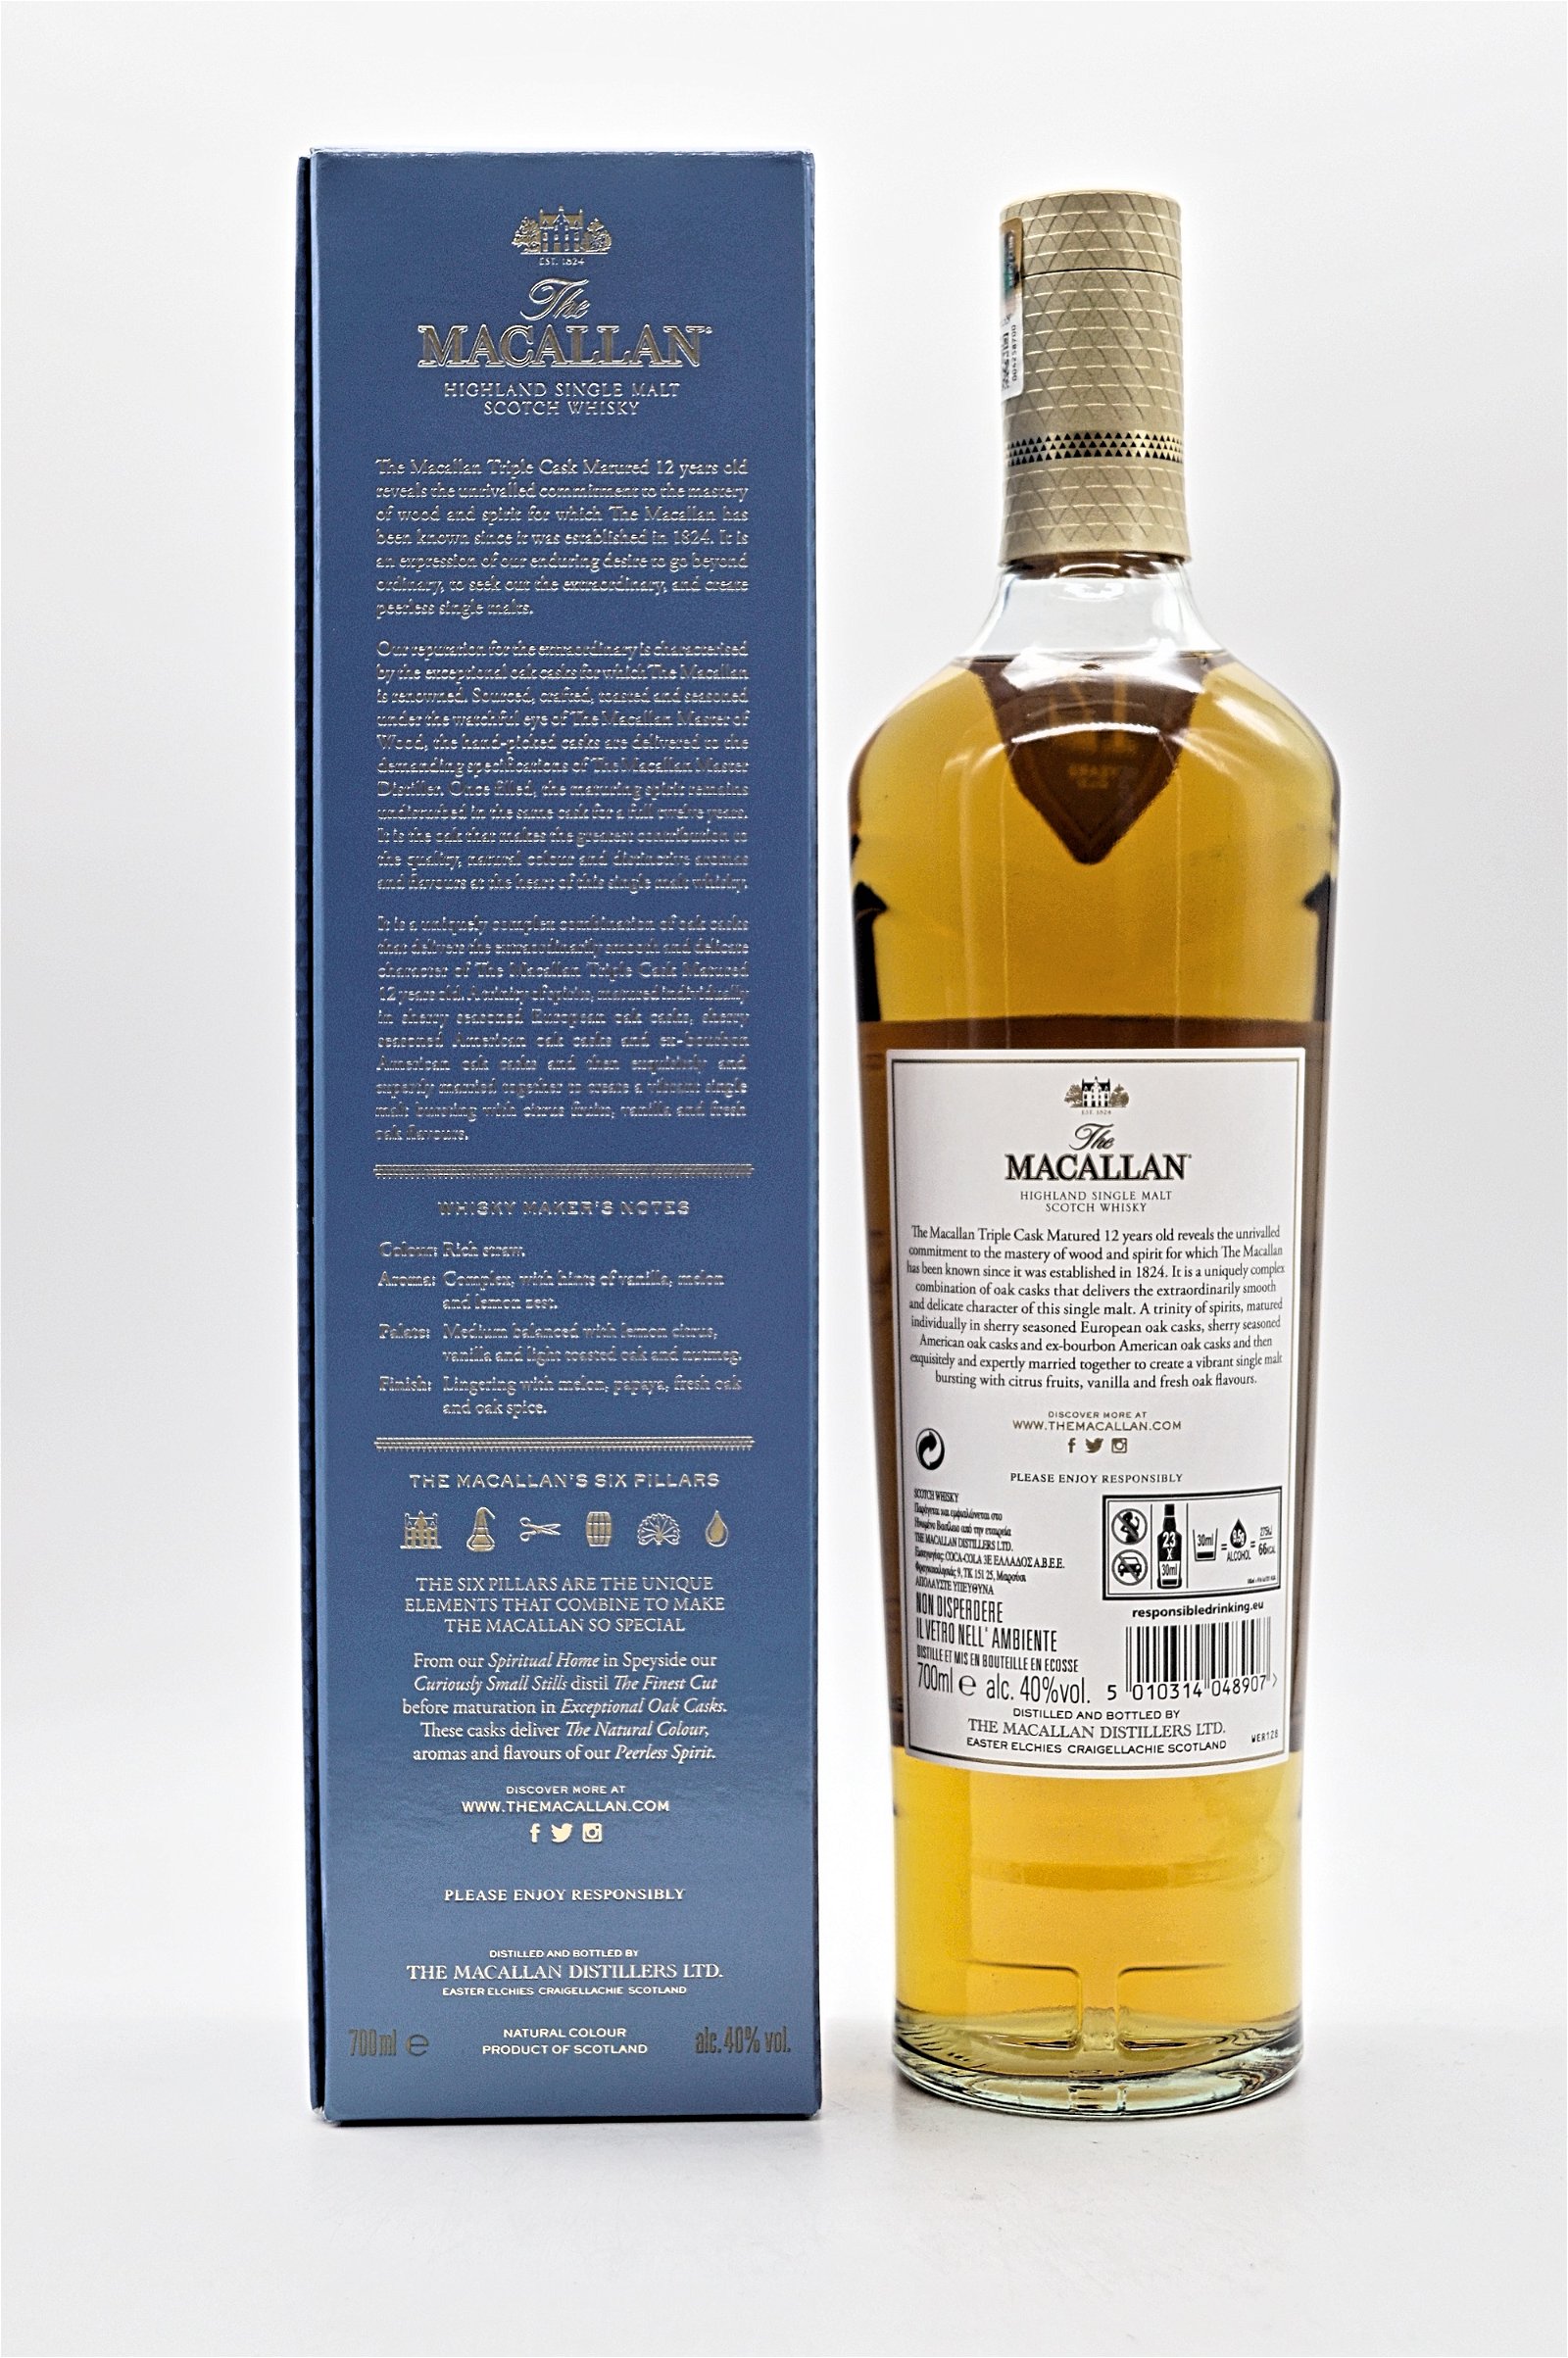 The Macallan 12 Jahre Fine Oak Trible Cask Matured Highland Single Malt Scotch Whisky